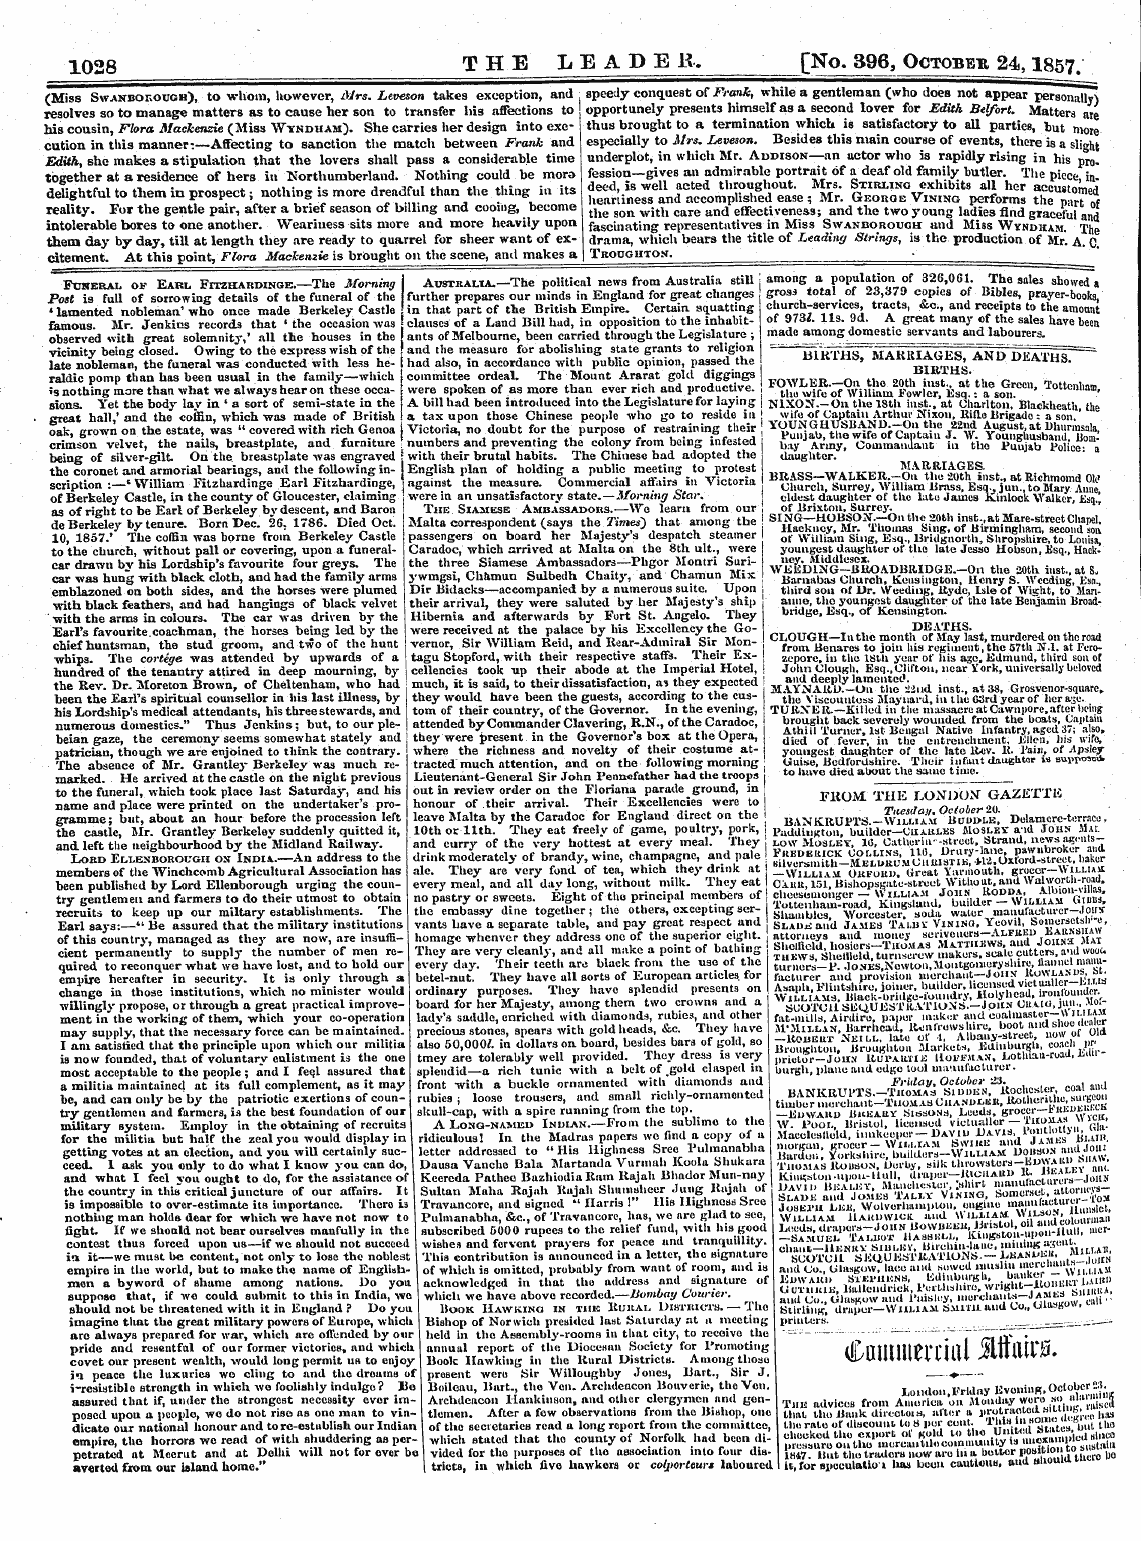 Leader (1850-1860): jS F Y, 2nd edition - I Ekom The London" Gazette. Tuesday. Oct...